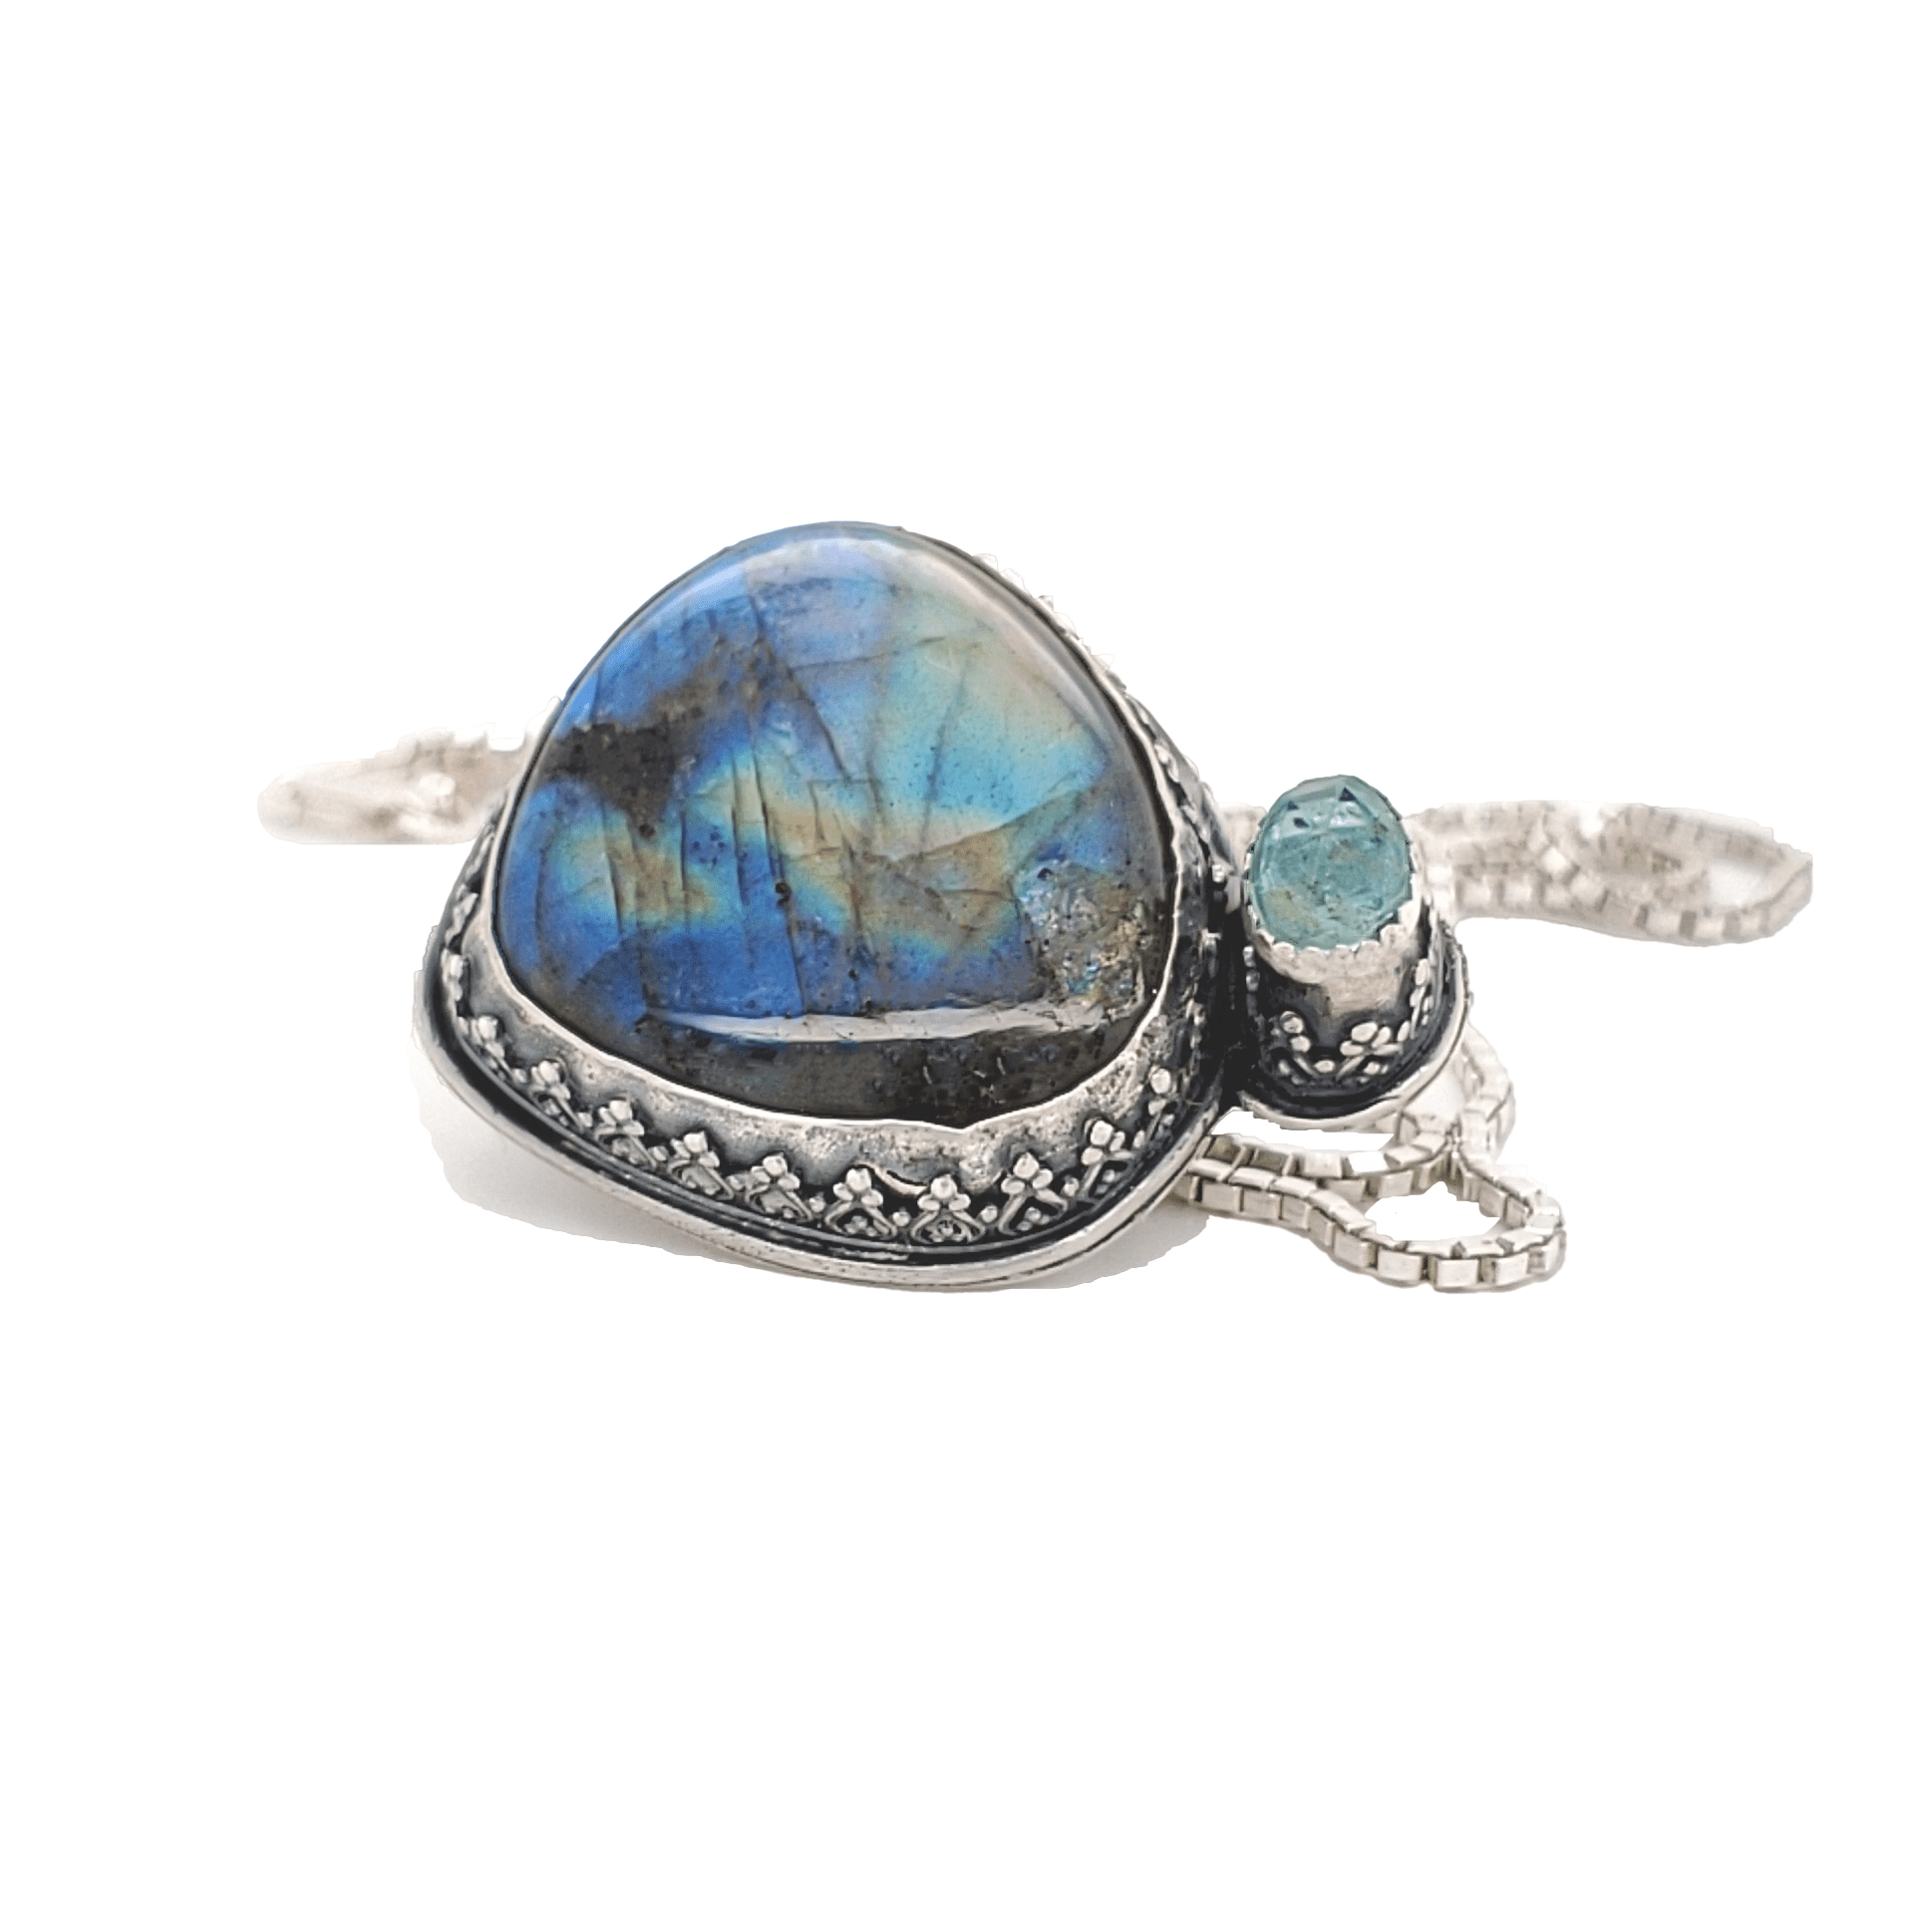 janet lasher Jewelry Necklace Aquamarine 1ct & Labradorite Sterling Pendant